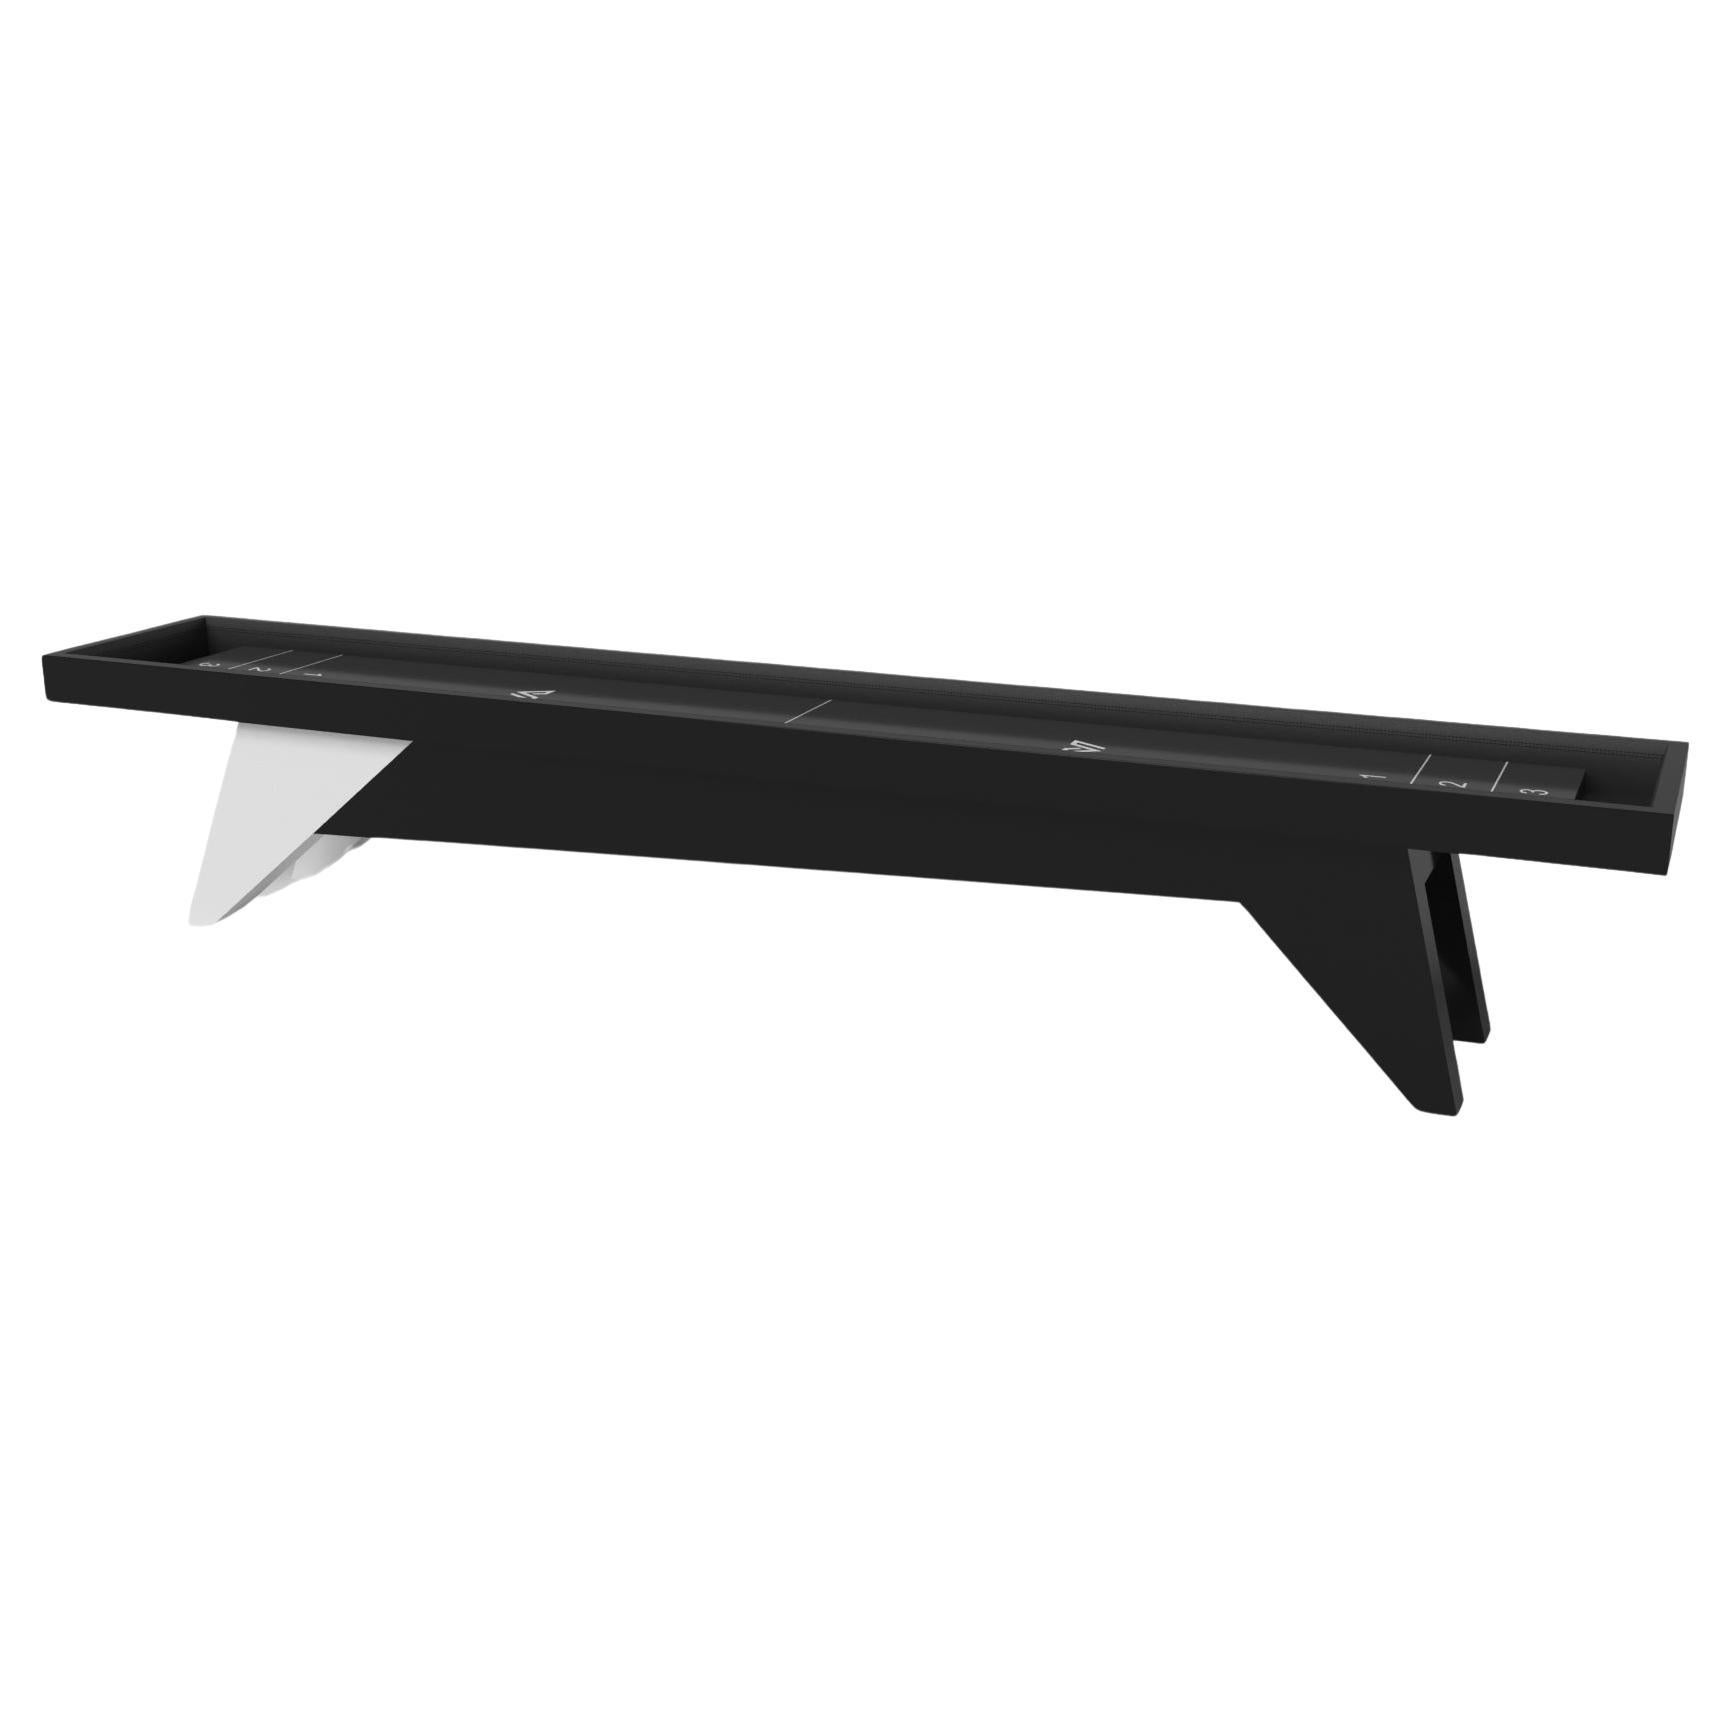 Elevate Customs Mantis Shuffleboard Tables /Solid Pantone Black Color in 9' -USA